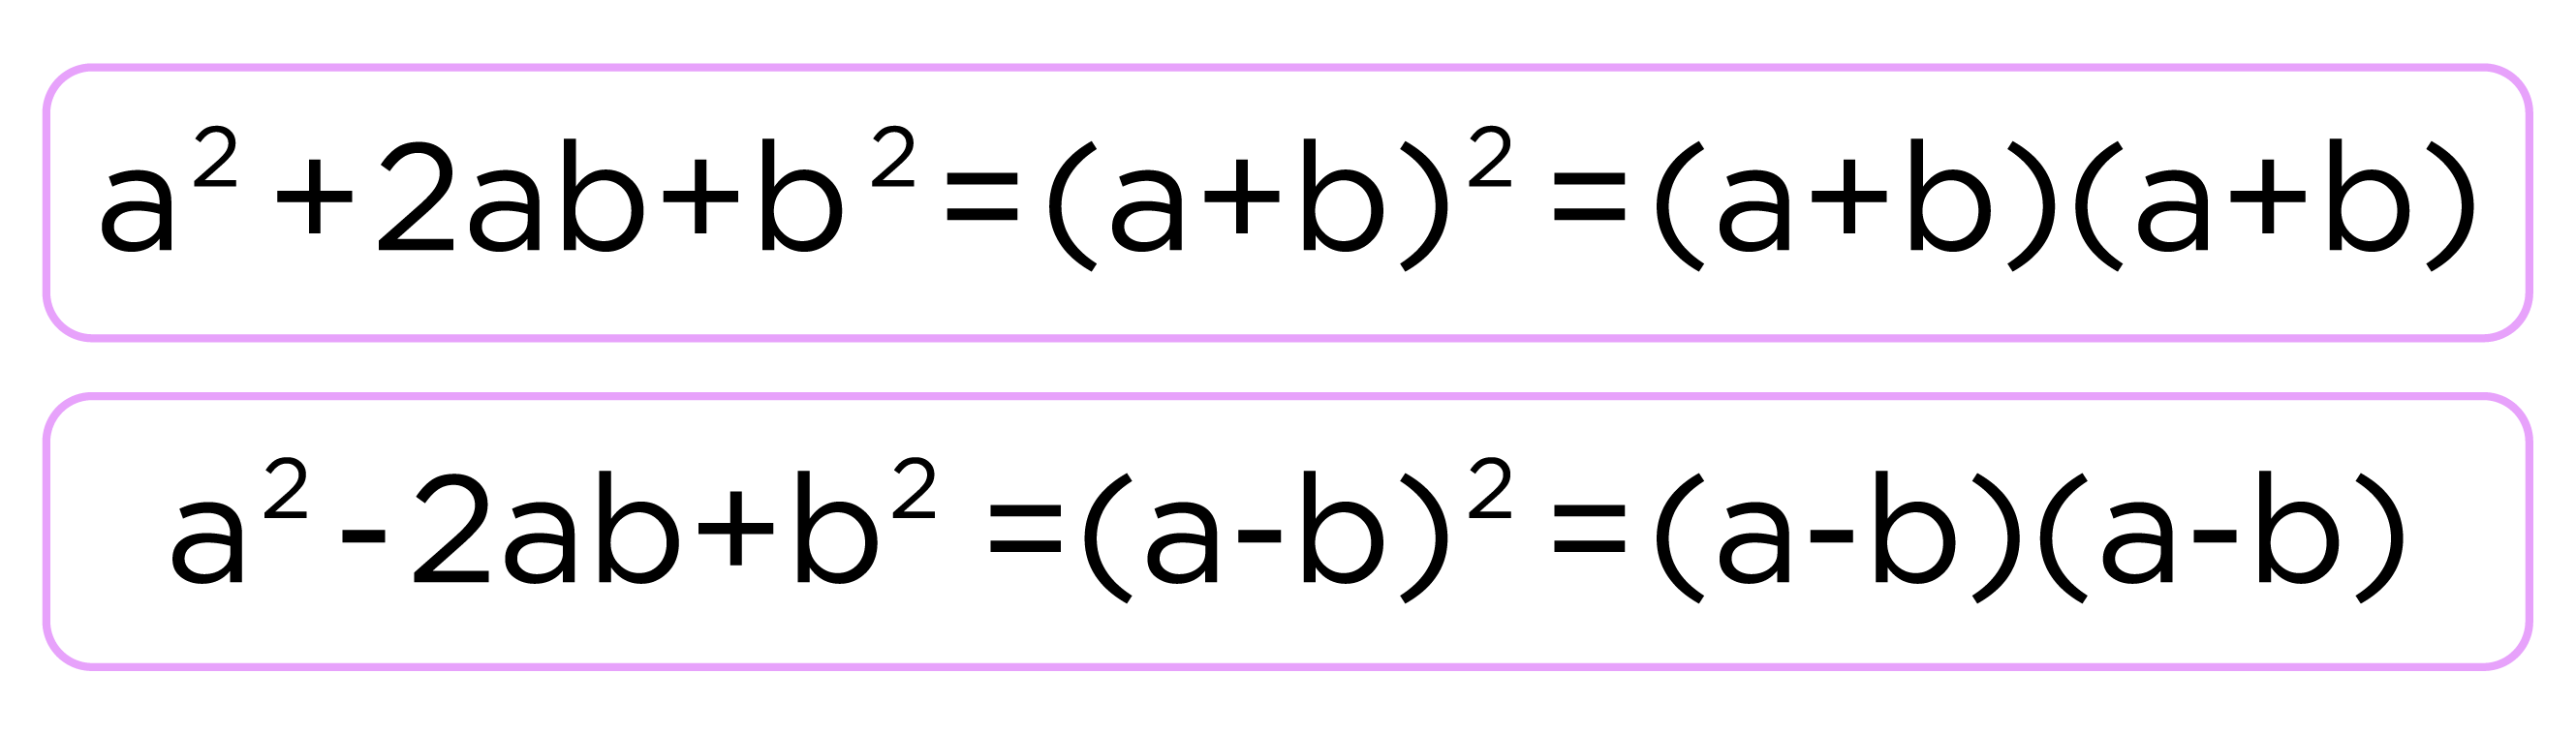 Разложение на множители с помощью формул квадрата суммы и квадрата разности  | Алгебра 7 класс